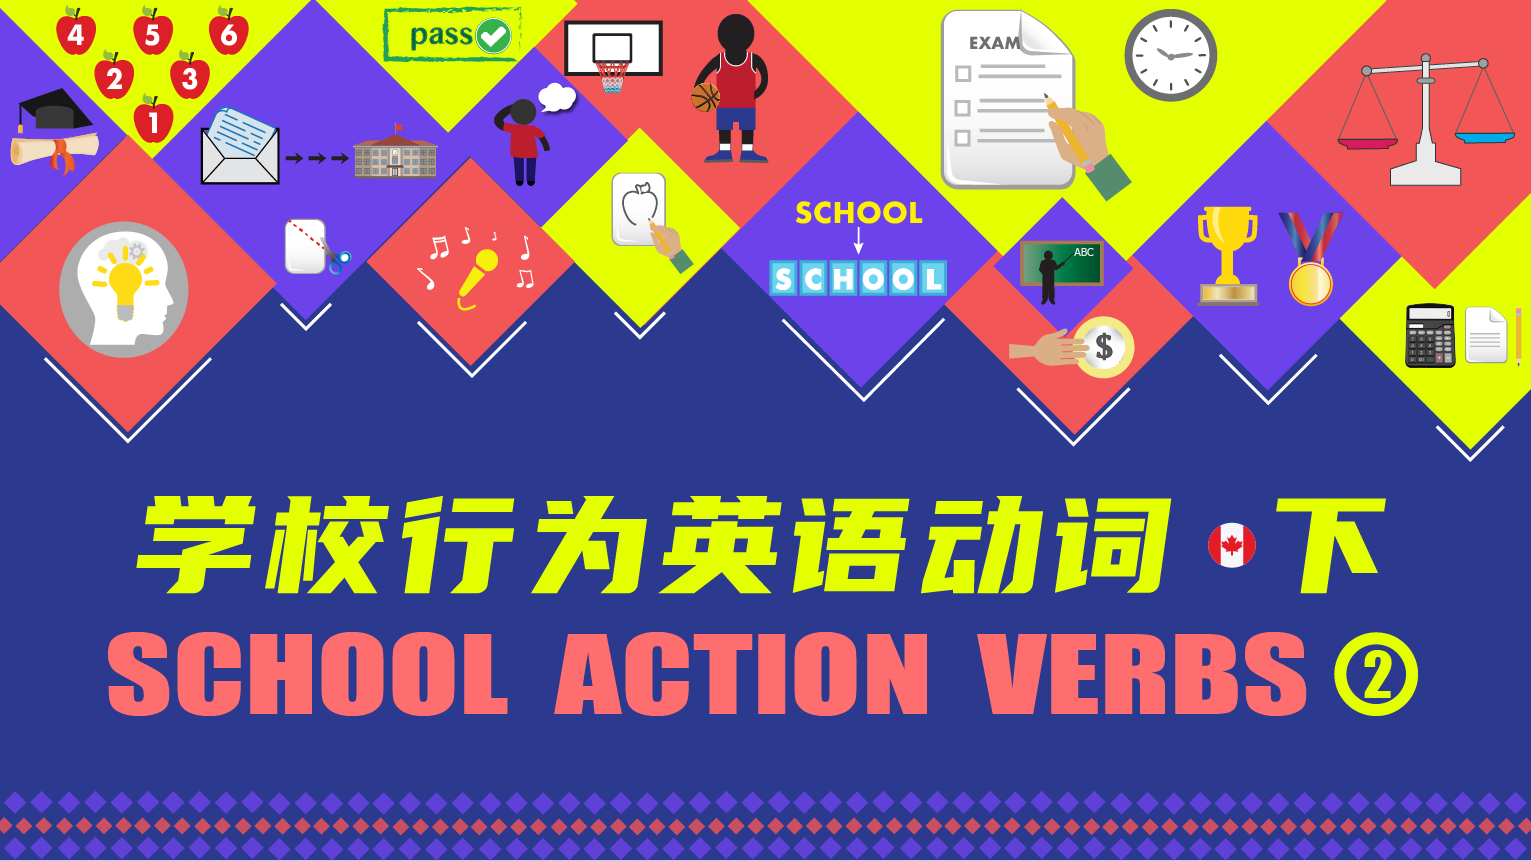 School Action Verbs Vocabulary - Part 2